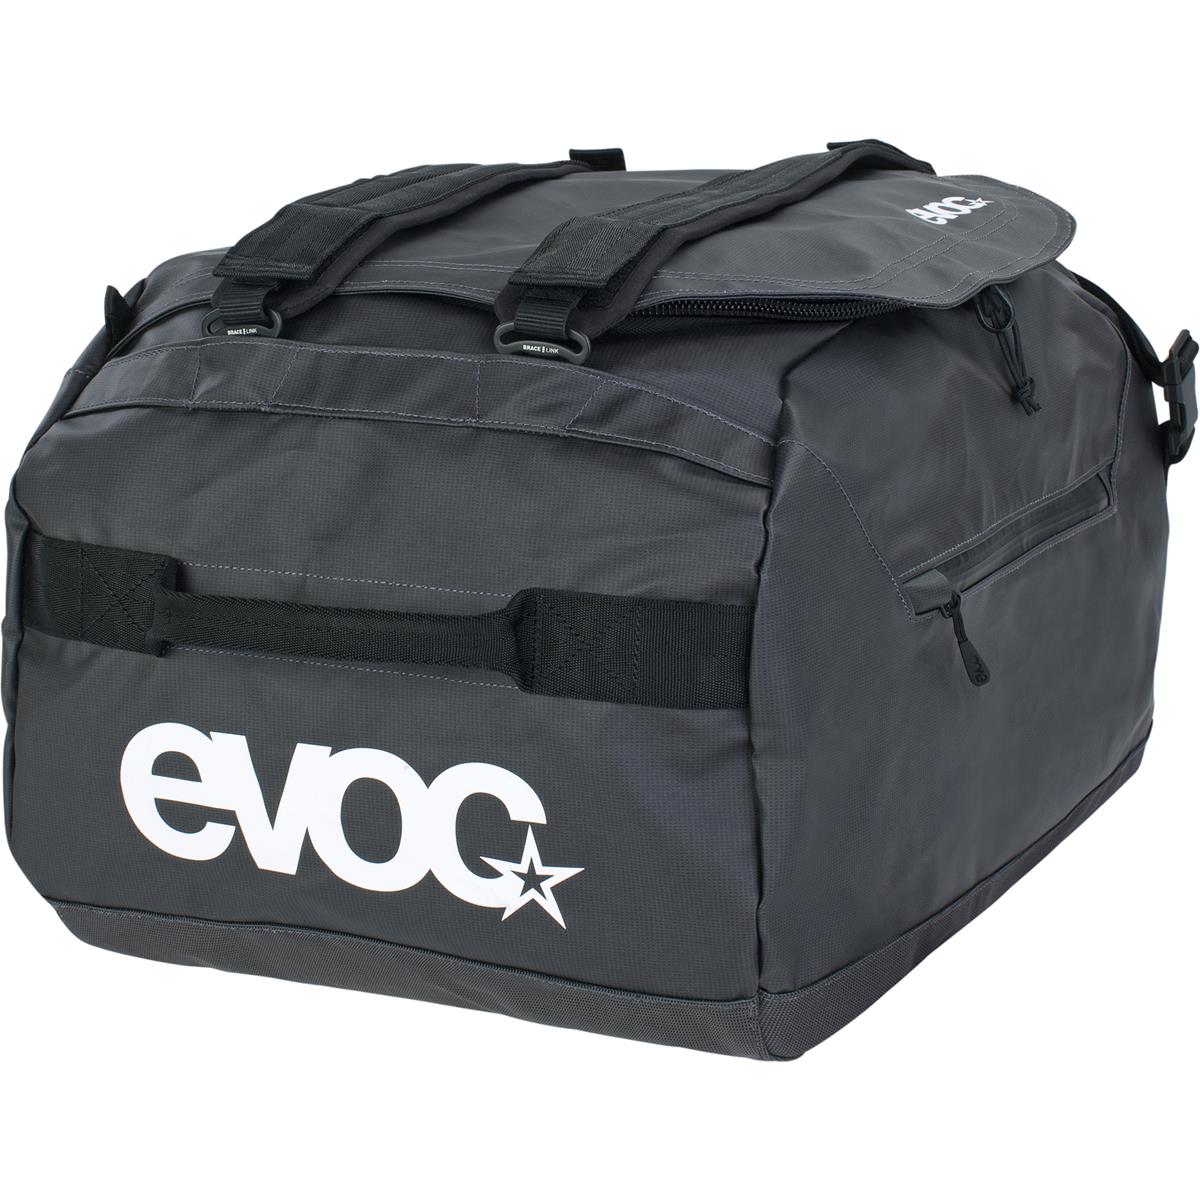 Evoc Reisetasche Duffle Bag 40 Carbon Grau/Schwarz